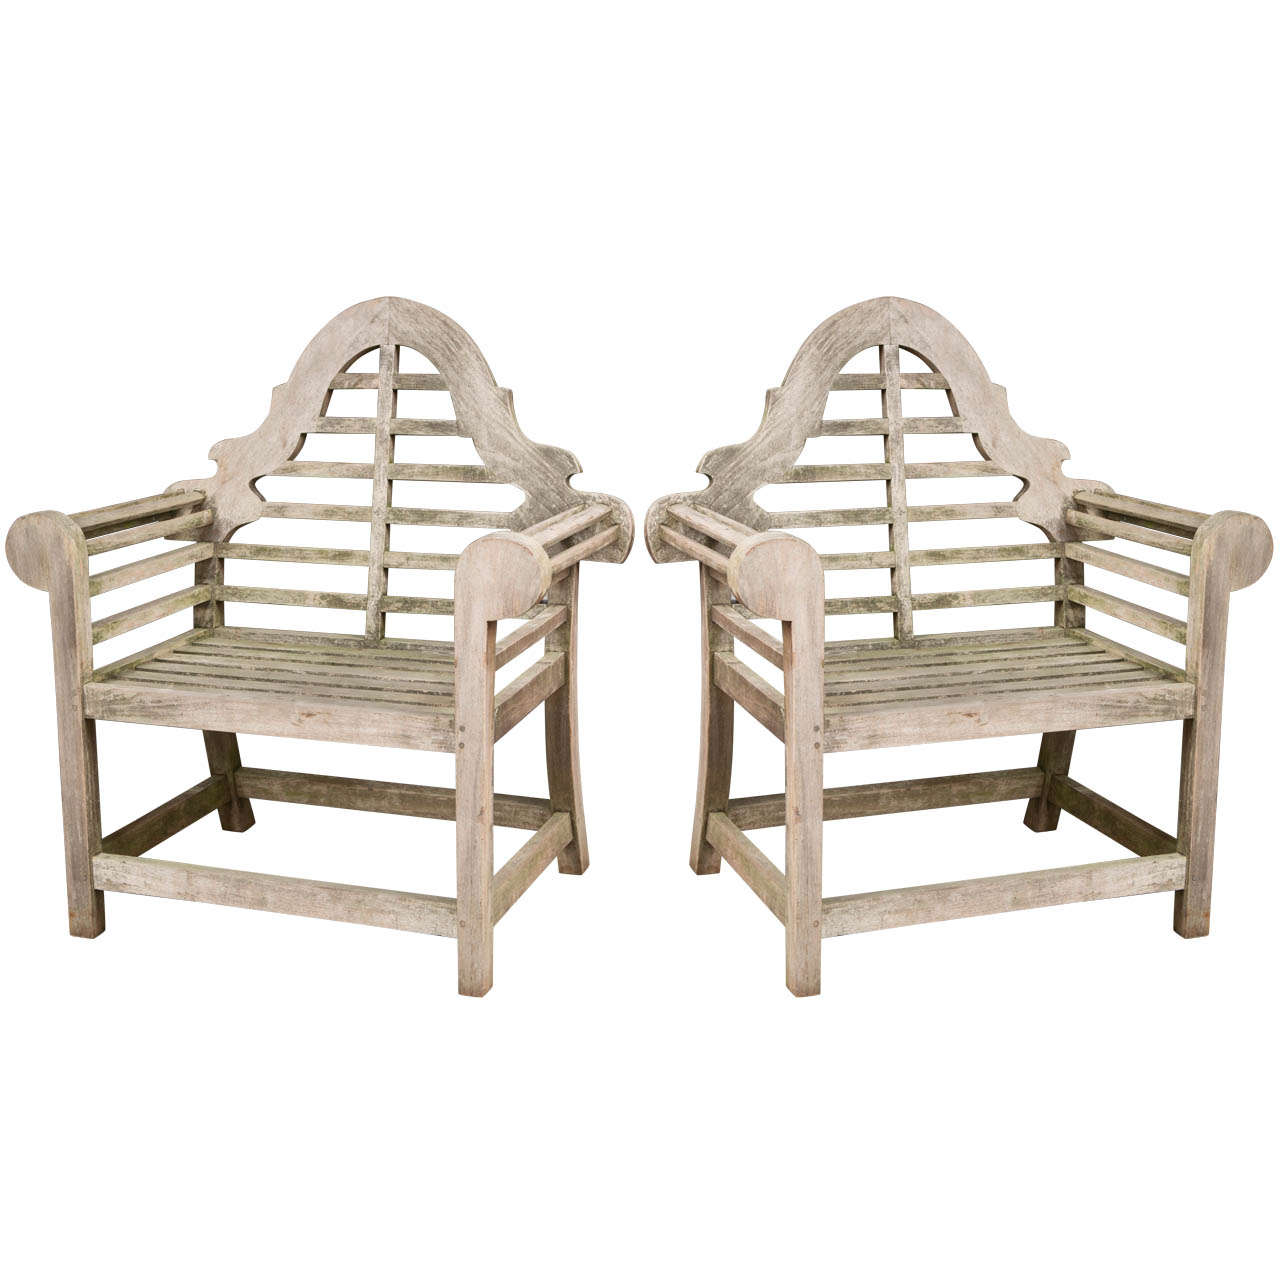 Pair of English Lutyen Garden Chairs